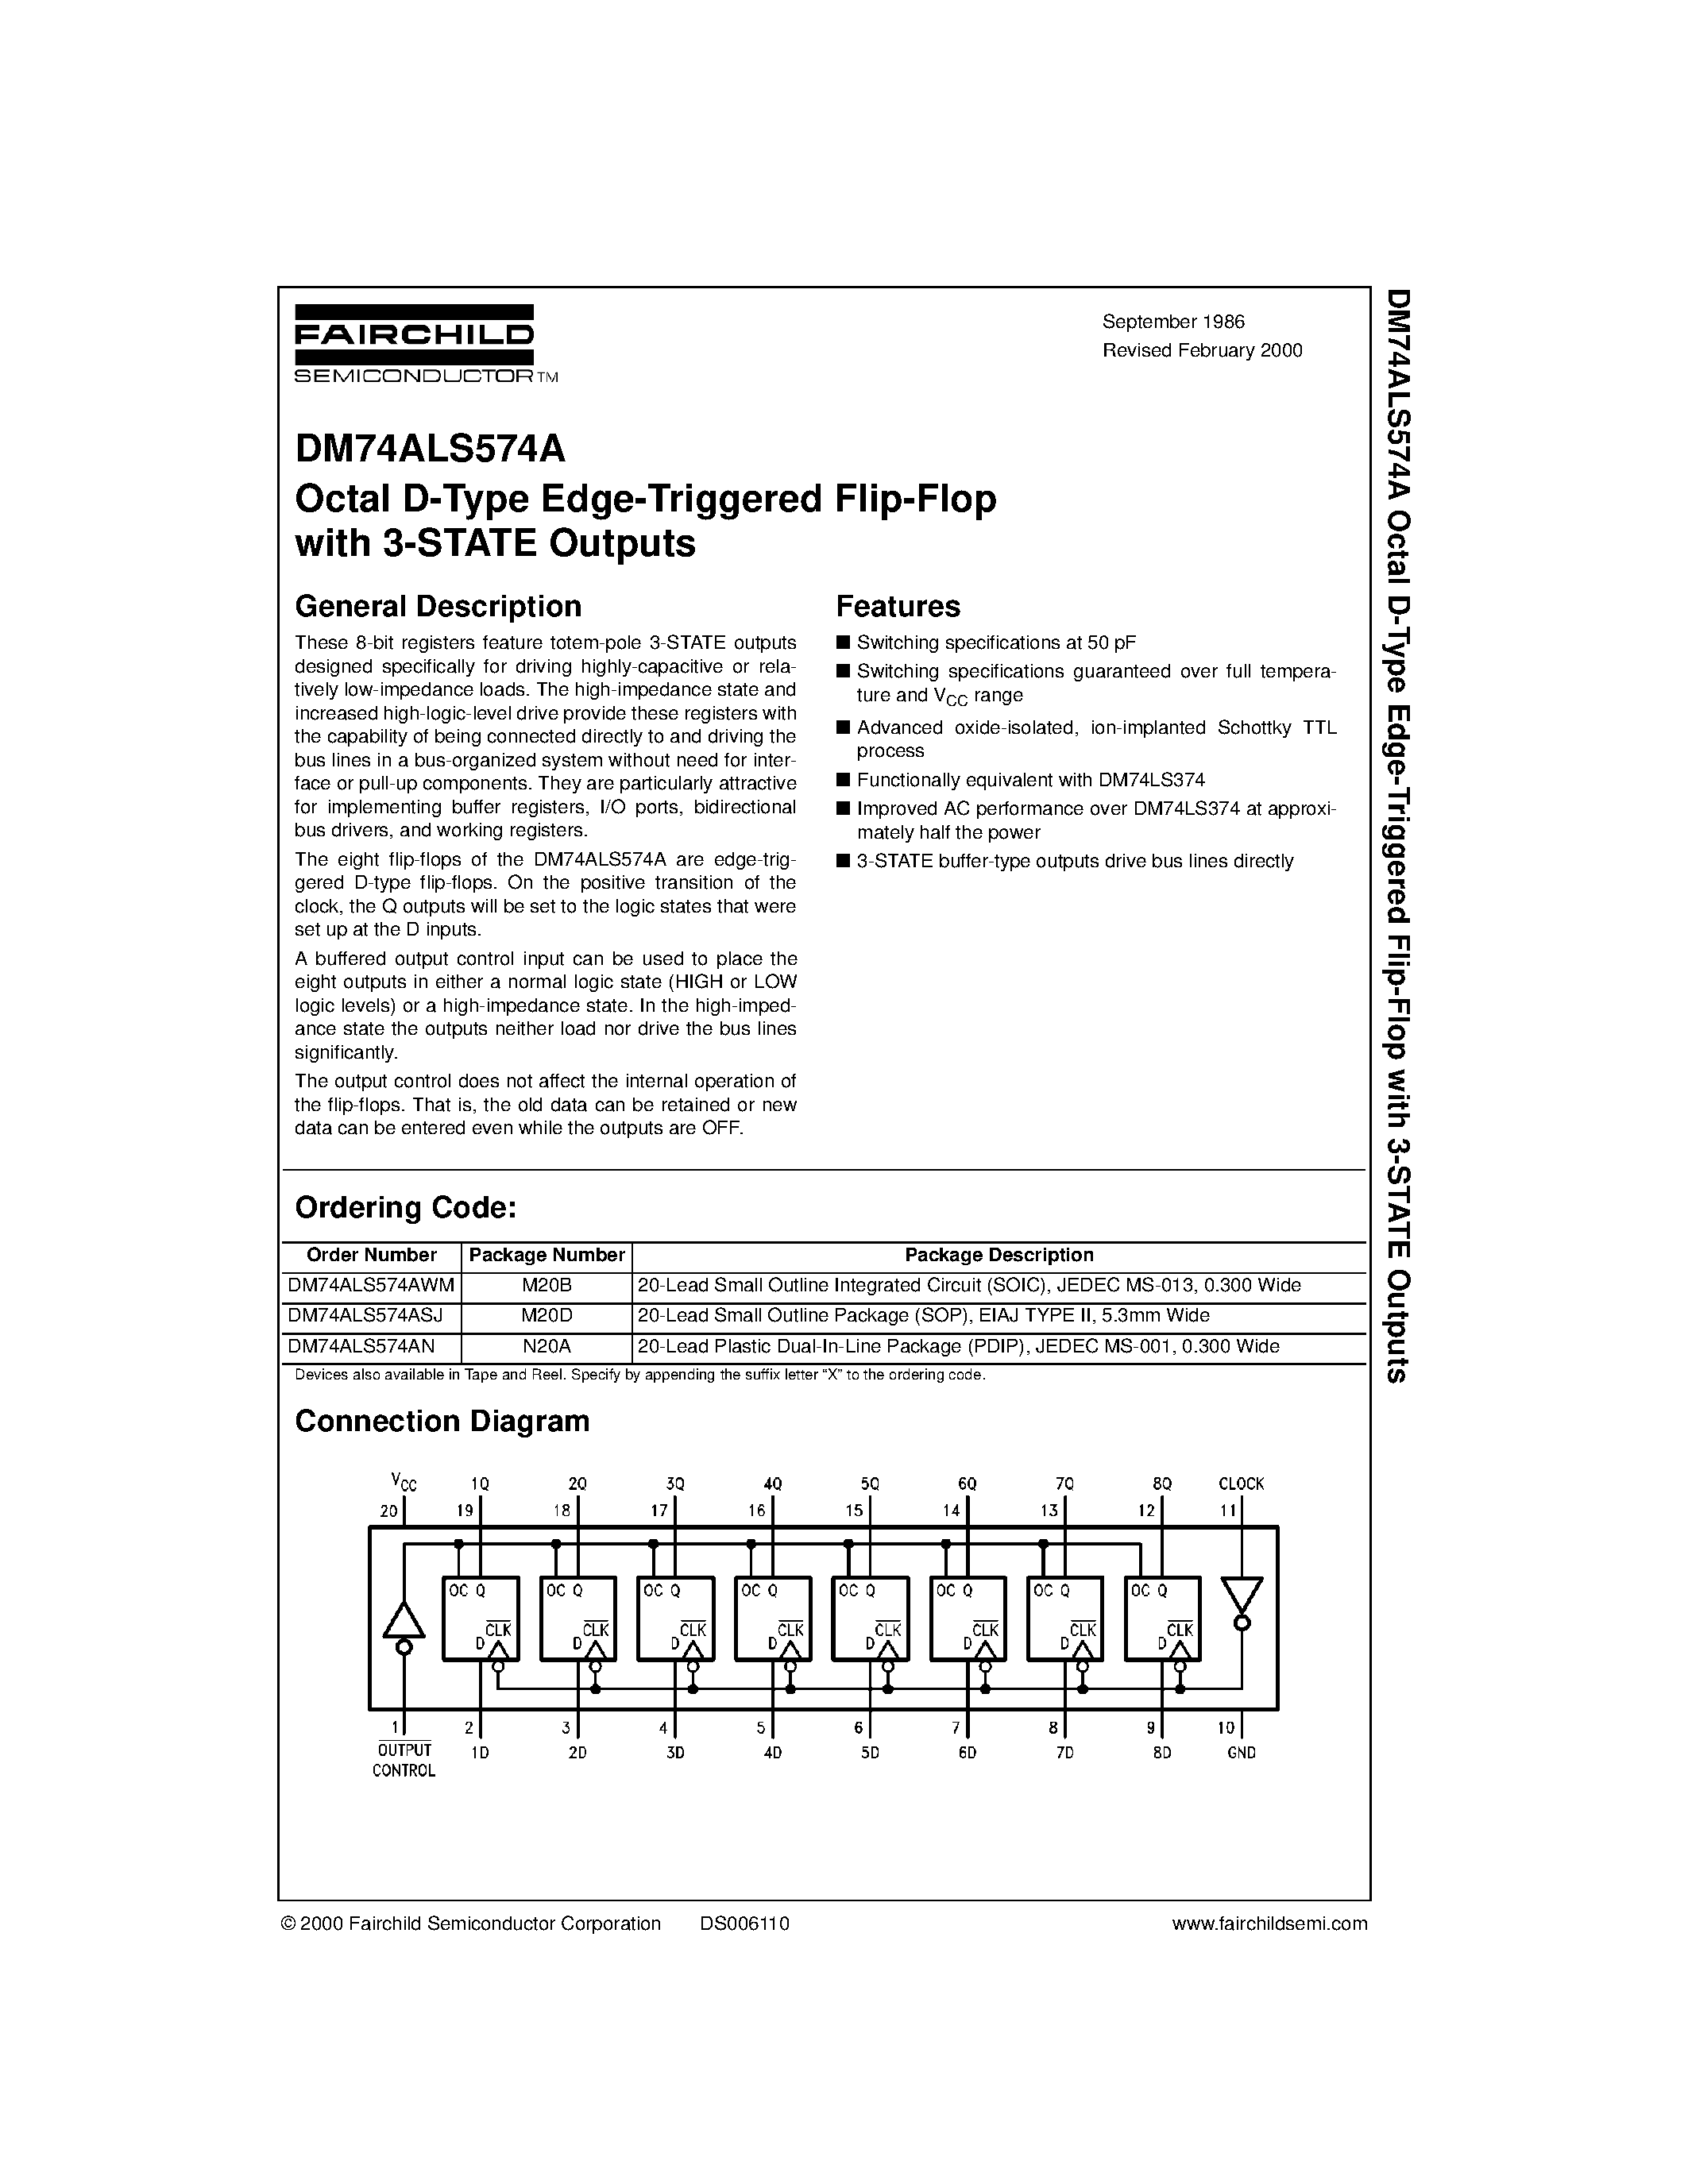 Даташит DM74ALS574ASJ - Octal D-Type Edge-Triggered Flip-Flop with 3-STATE Outputs страница 1